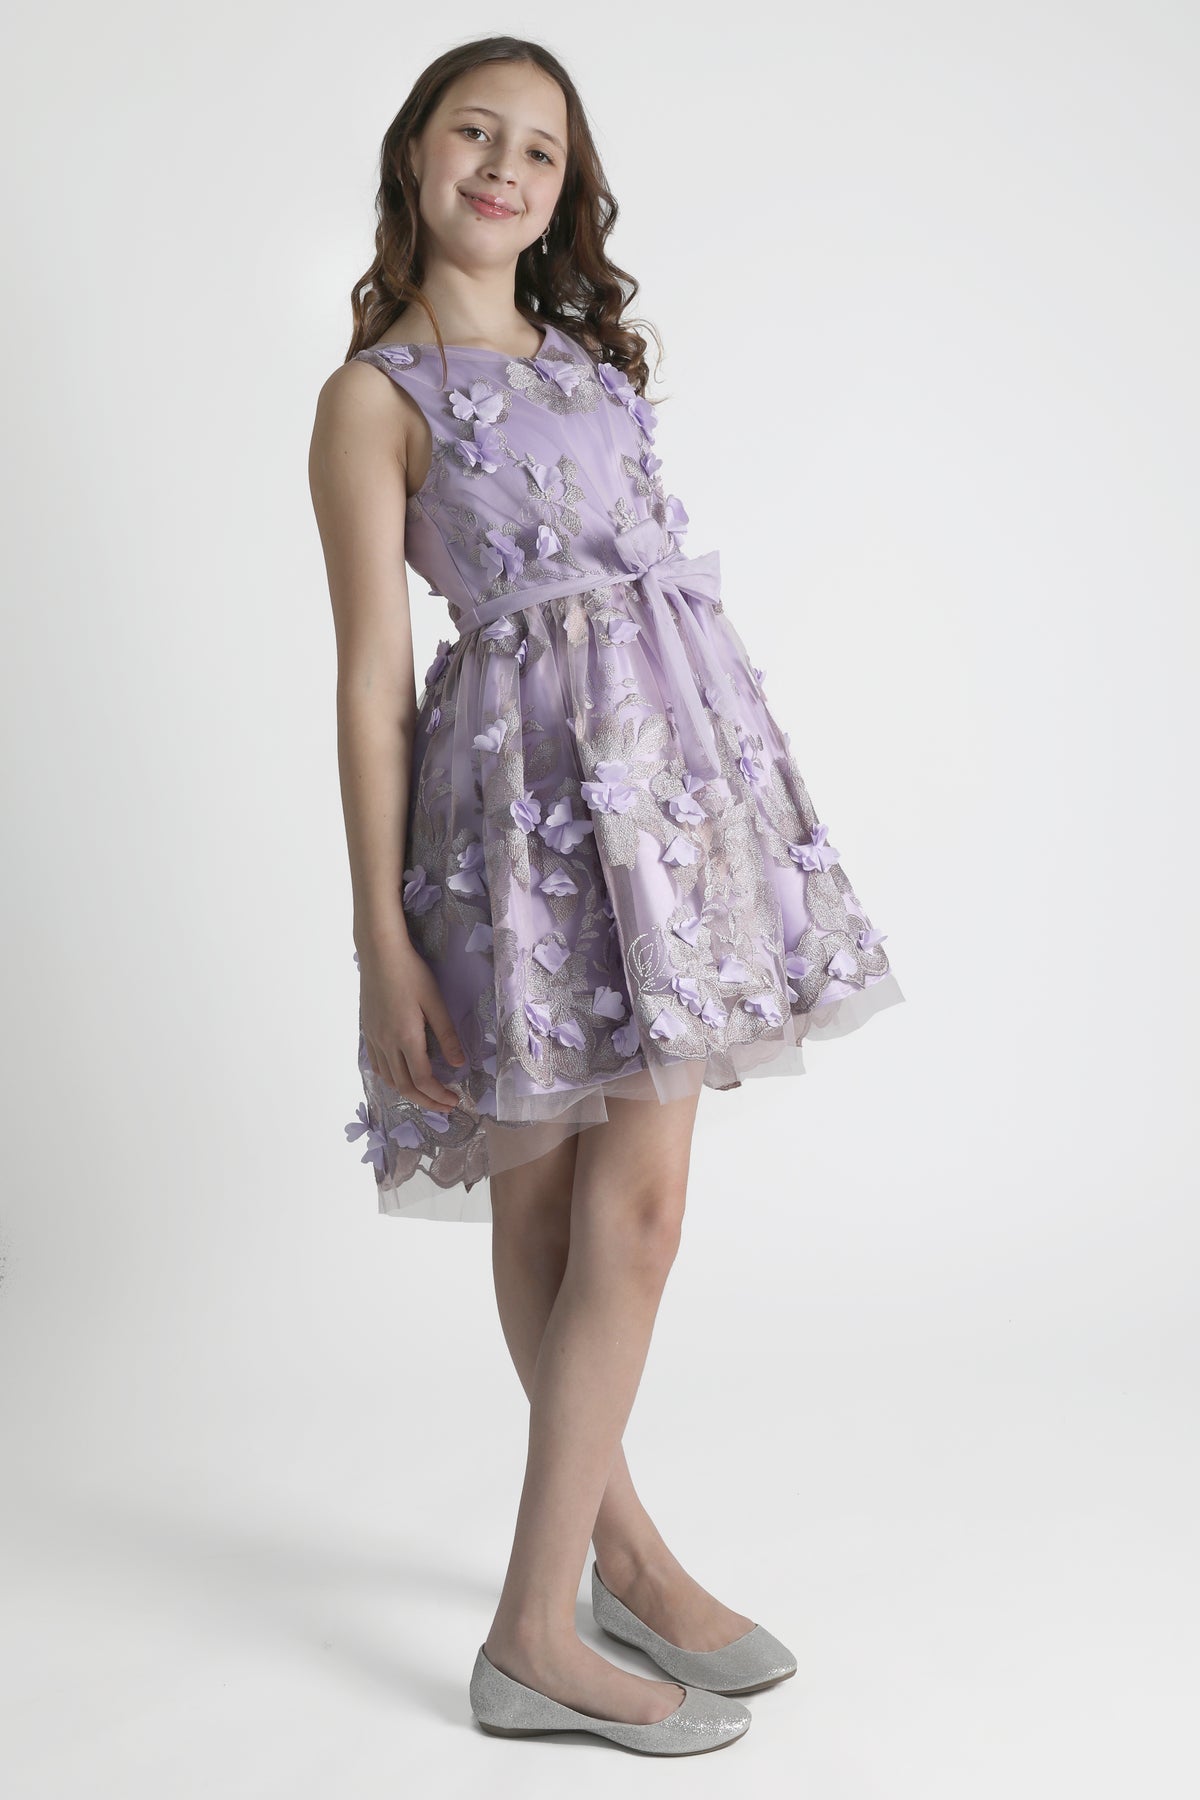 Stylish Girls Cotton Blend Dress - 6-7 Years at Rs 359 | Girls Cotton  Frocks | ID: 2850040302888